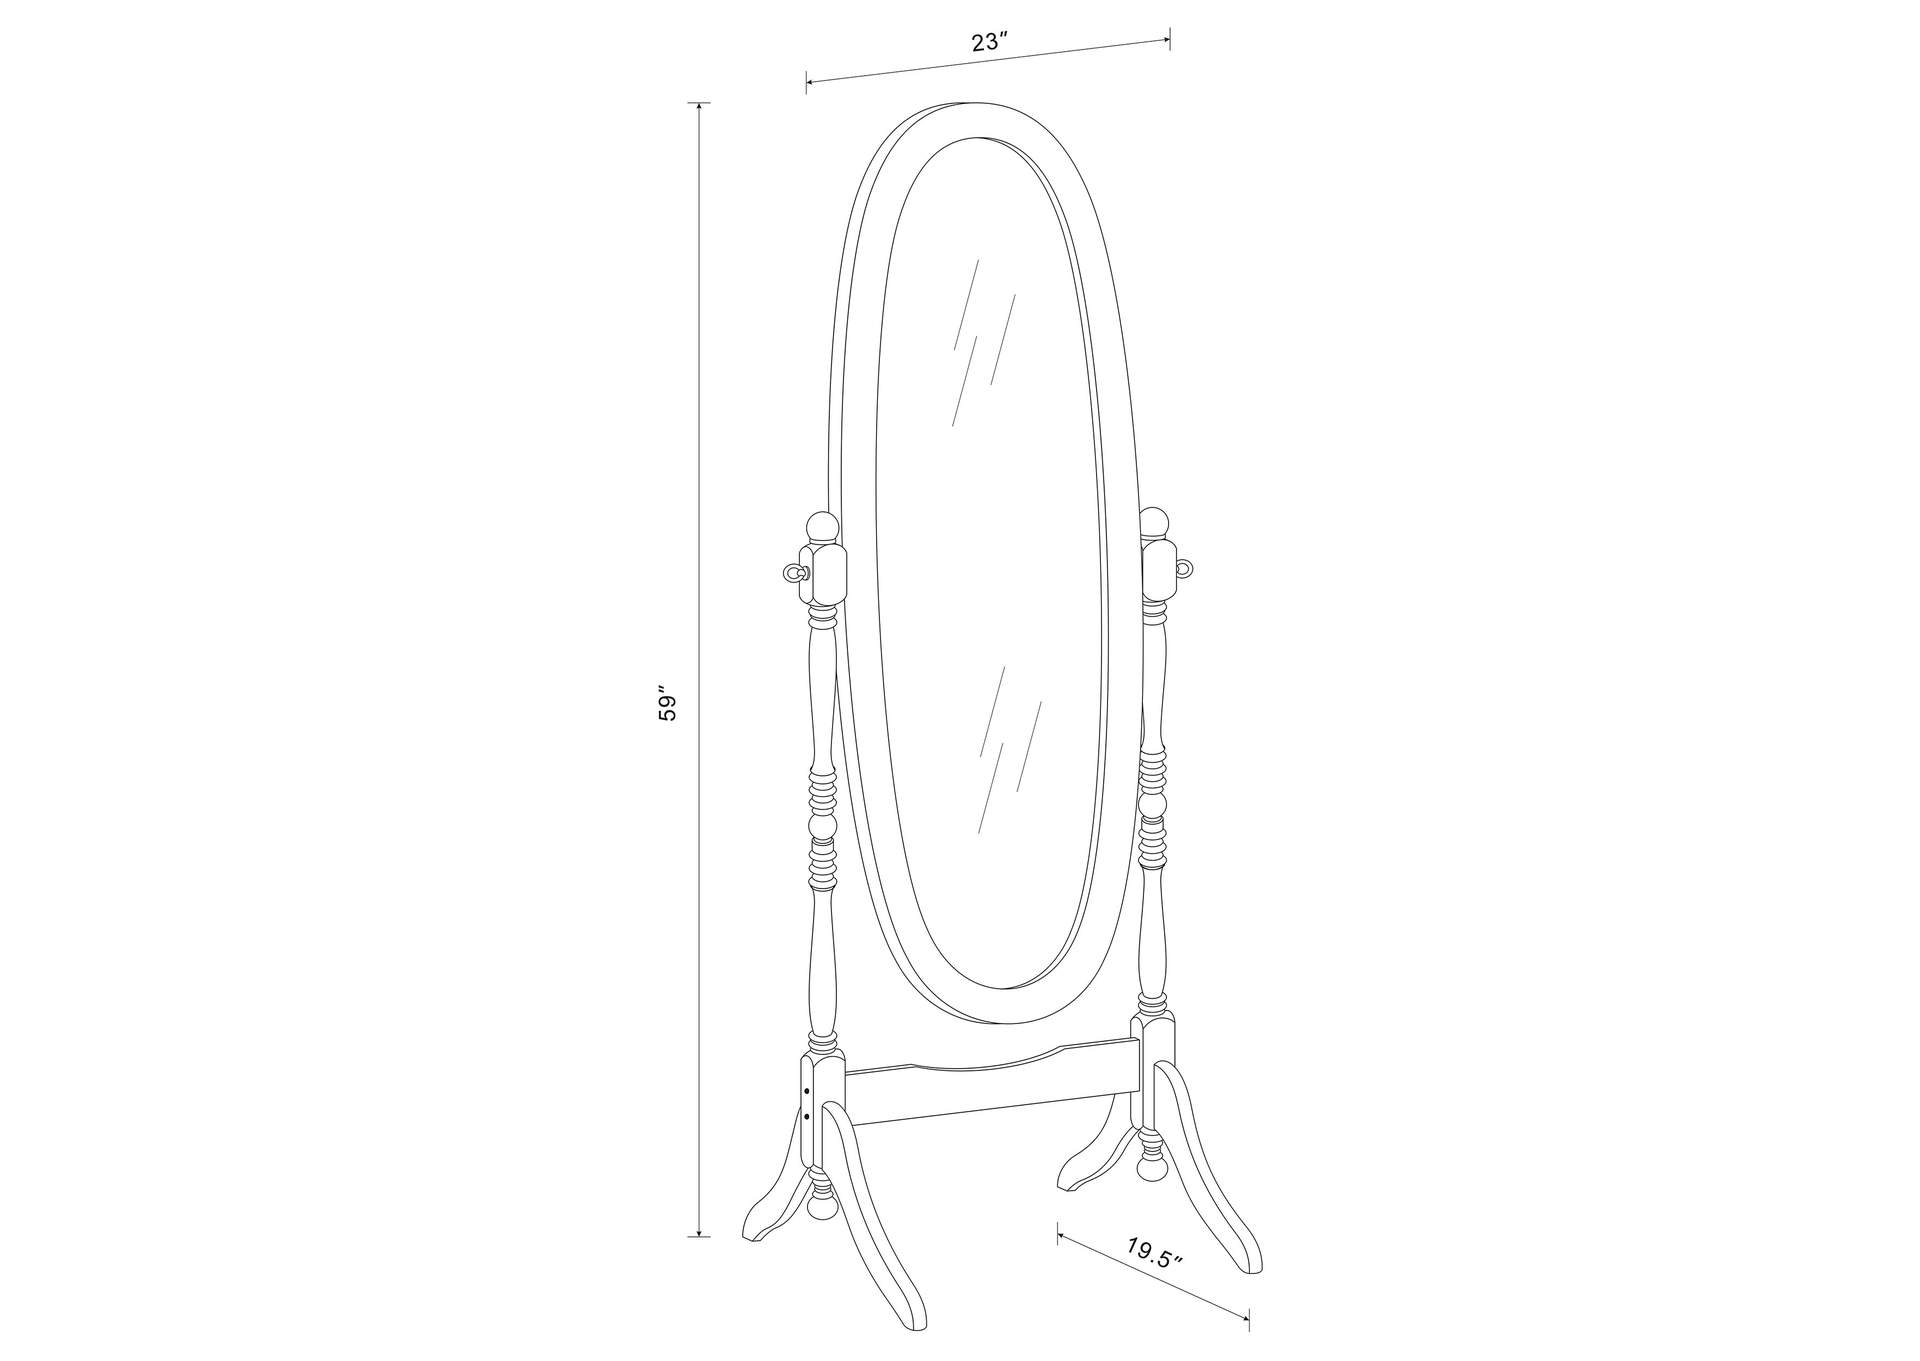 Foyet Oval Cheval Mirror Merlot,Coaster Furniture